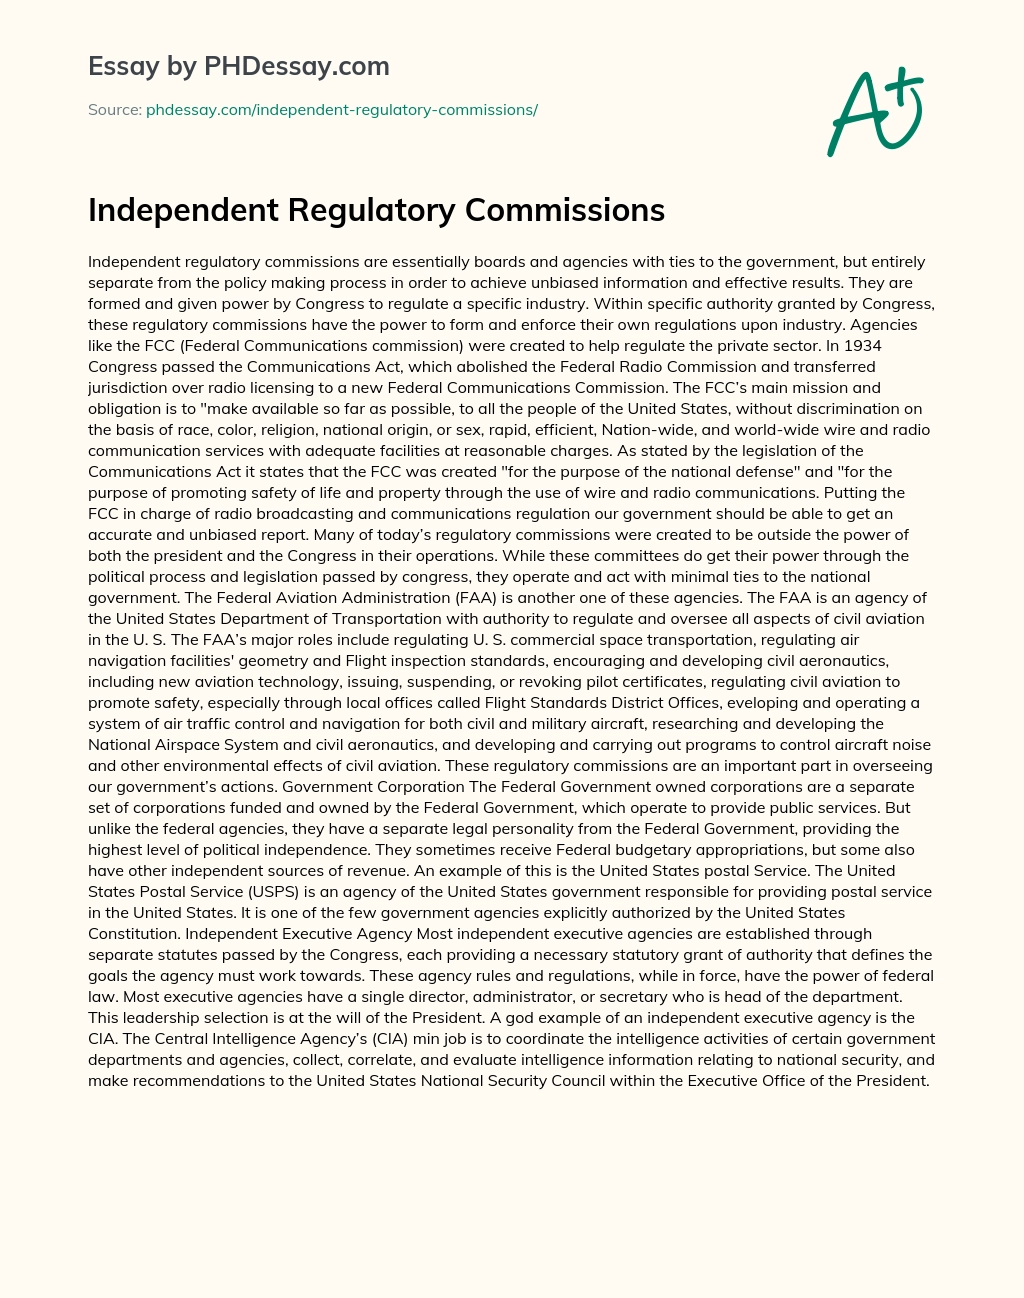 Independent Regulatory Commissions essay